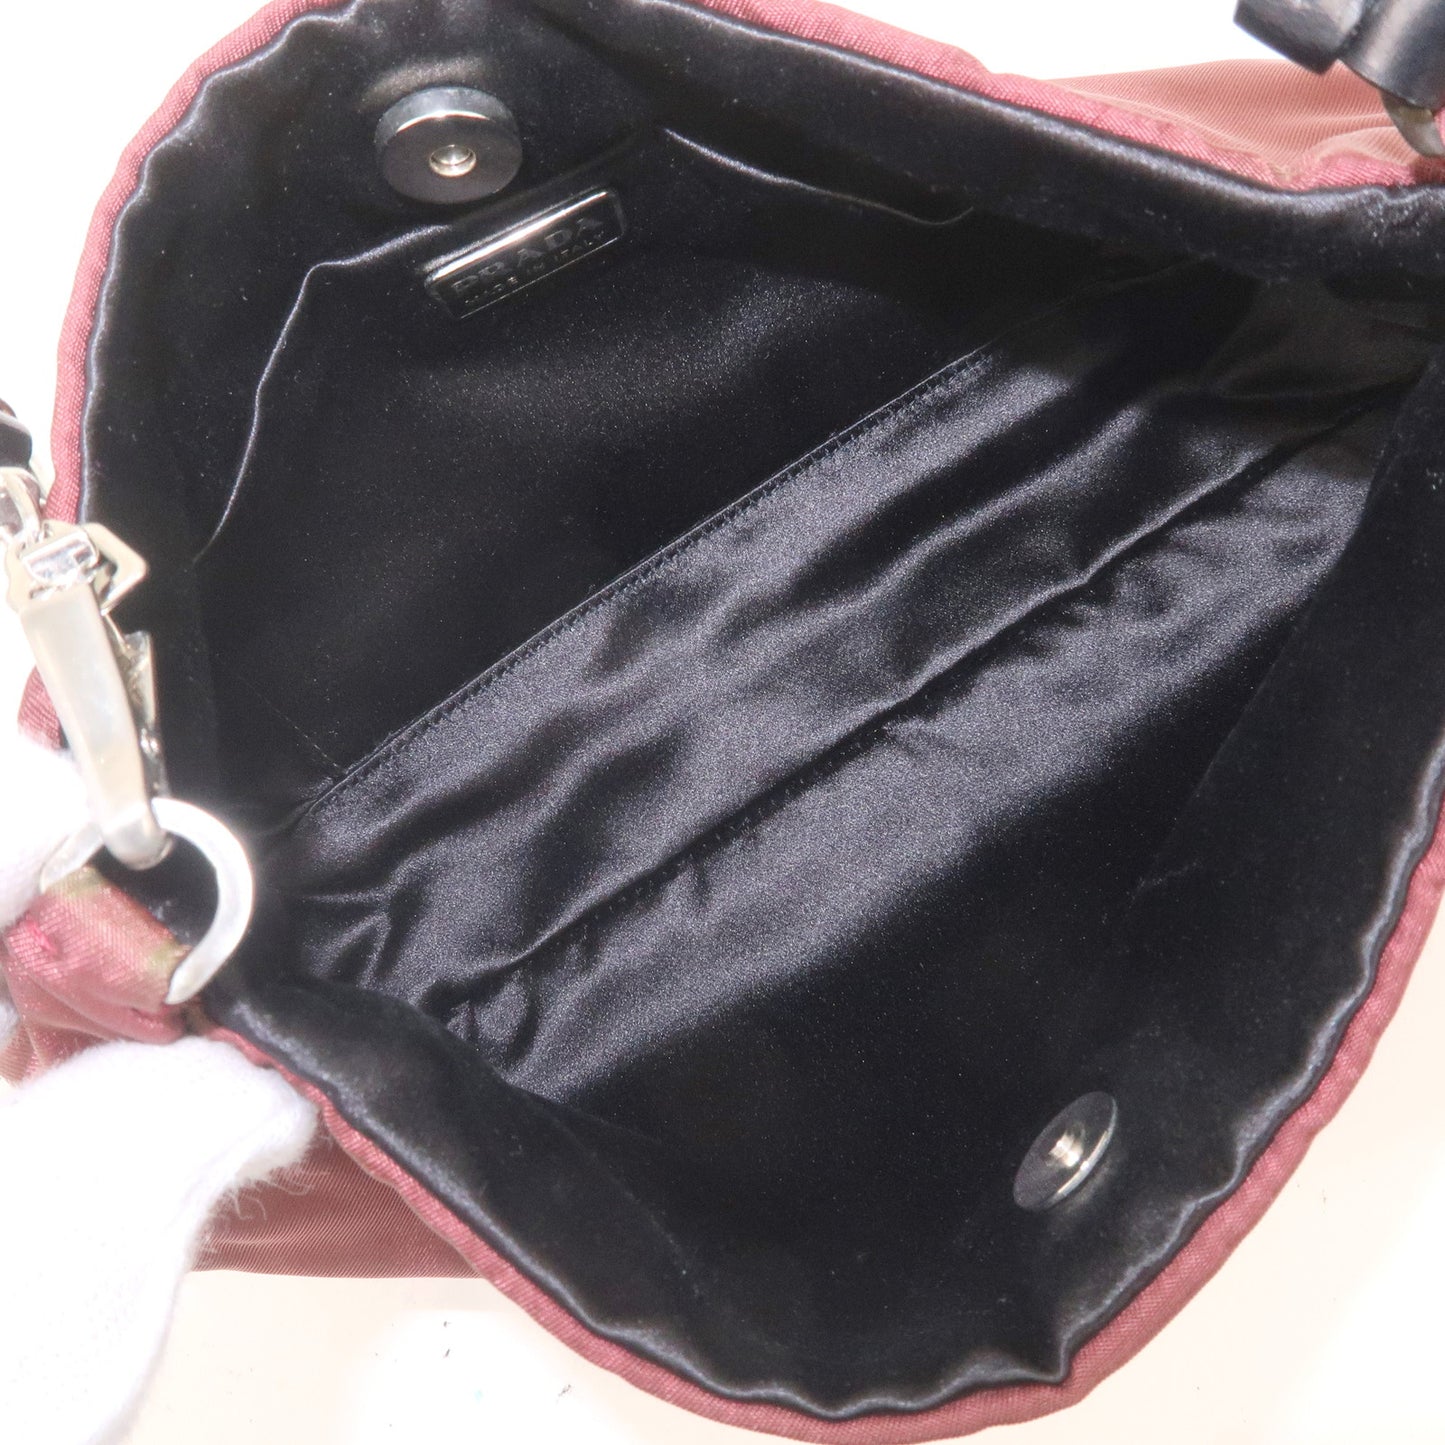 PRADA Nylon Leather Accessory Pouch Bordeaux Black B10409